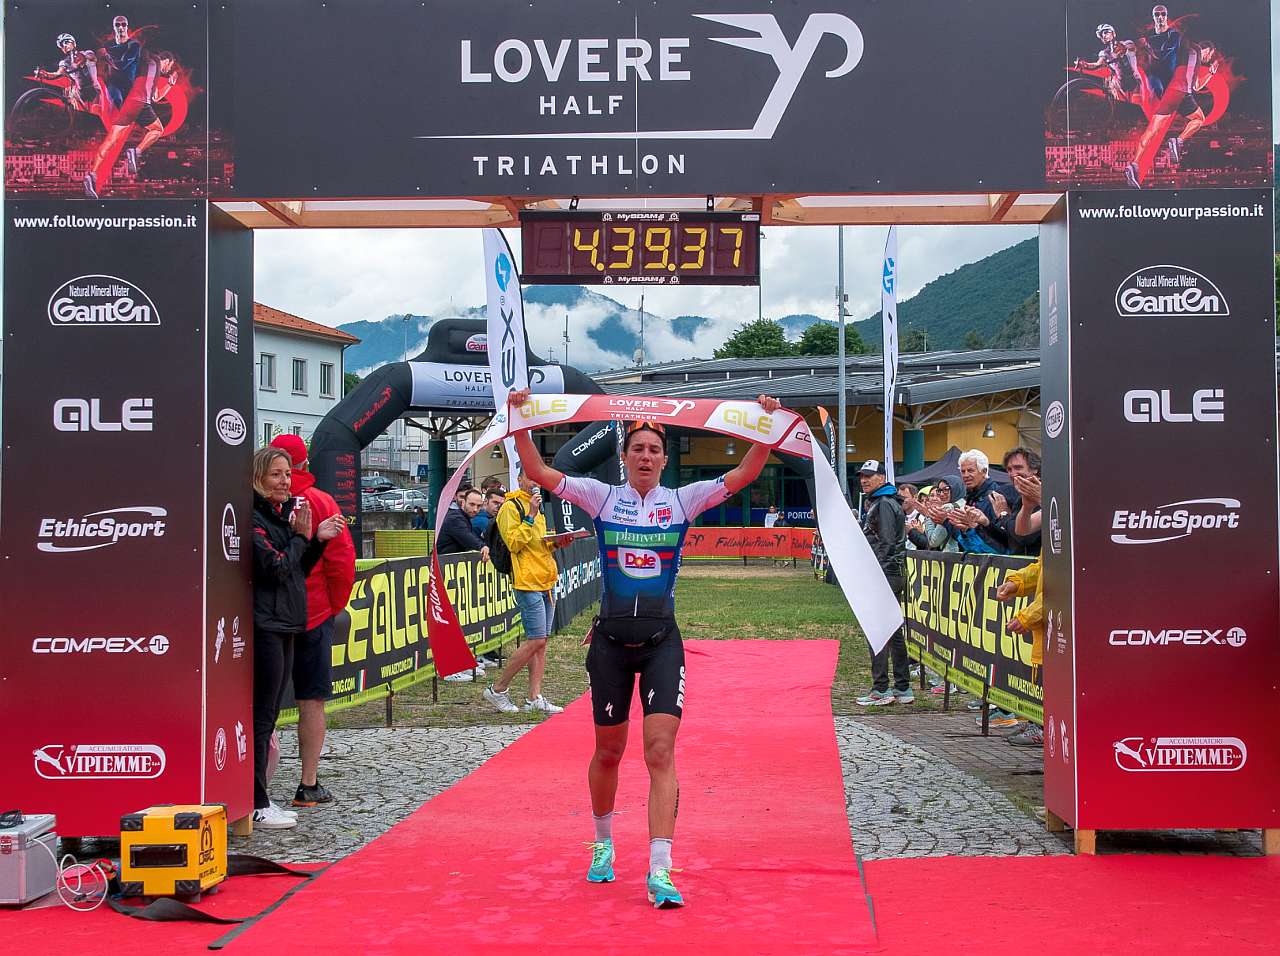 Eva Serena vince il Lovere Half Triathlon 2022